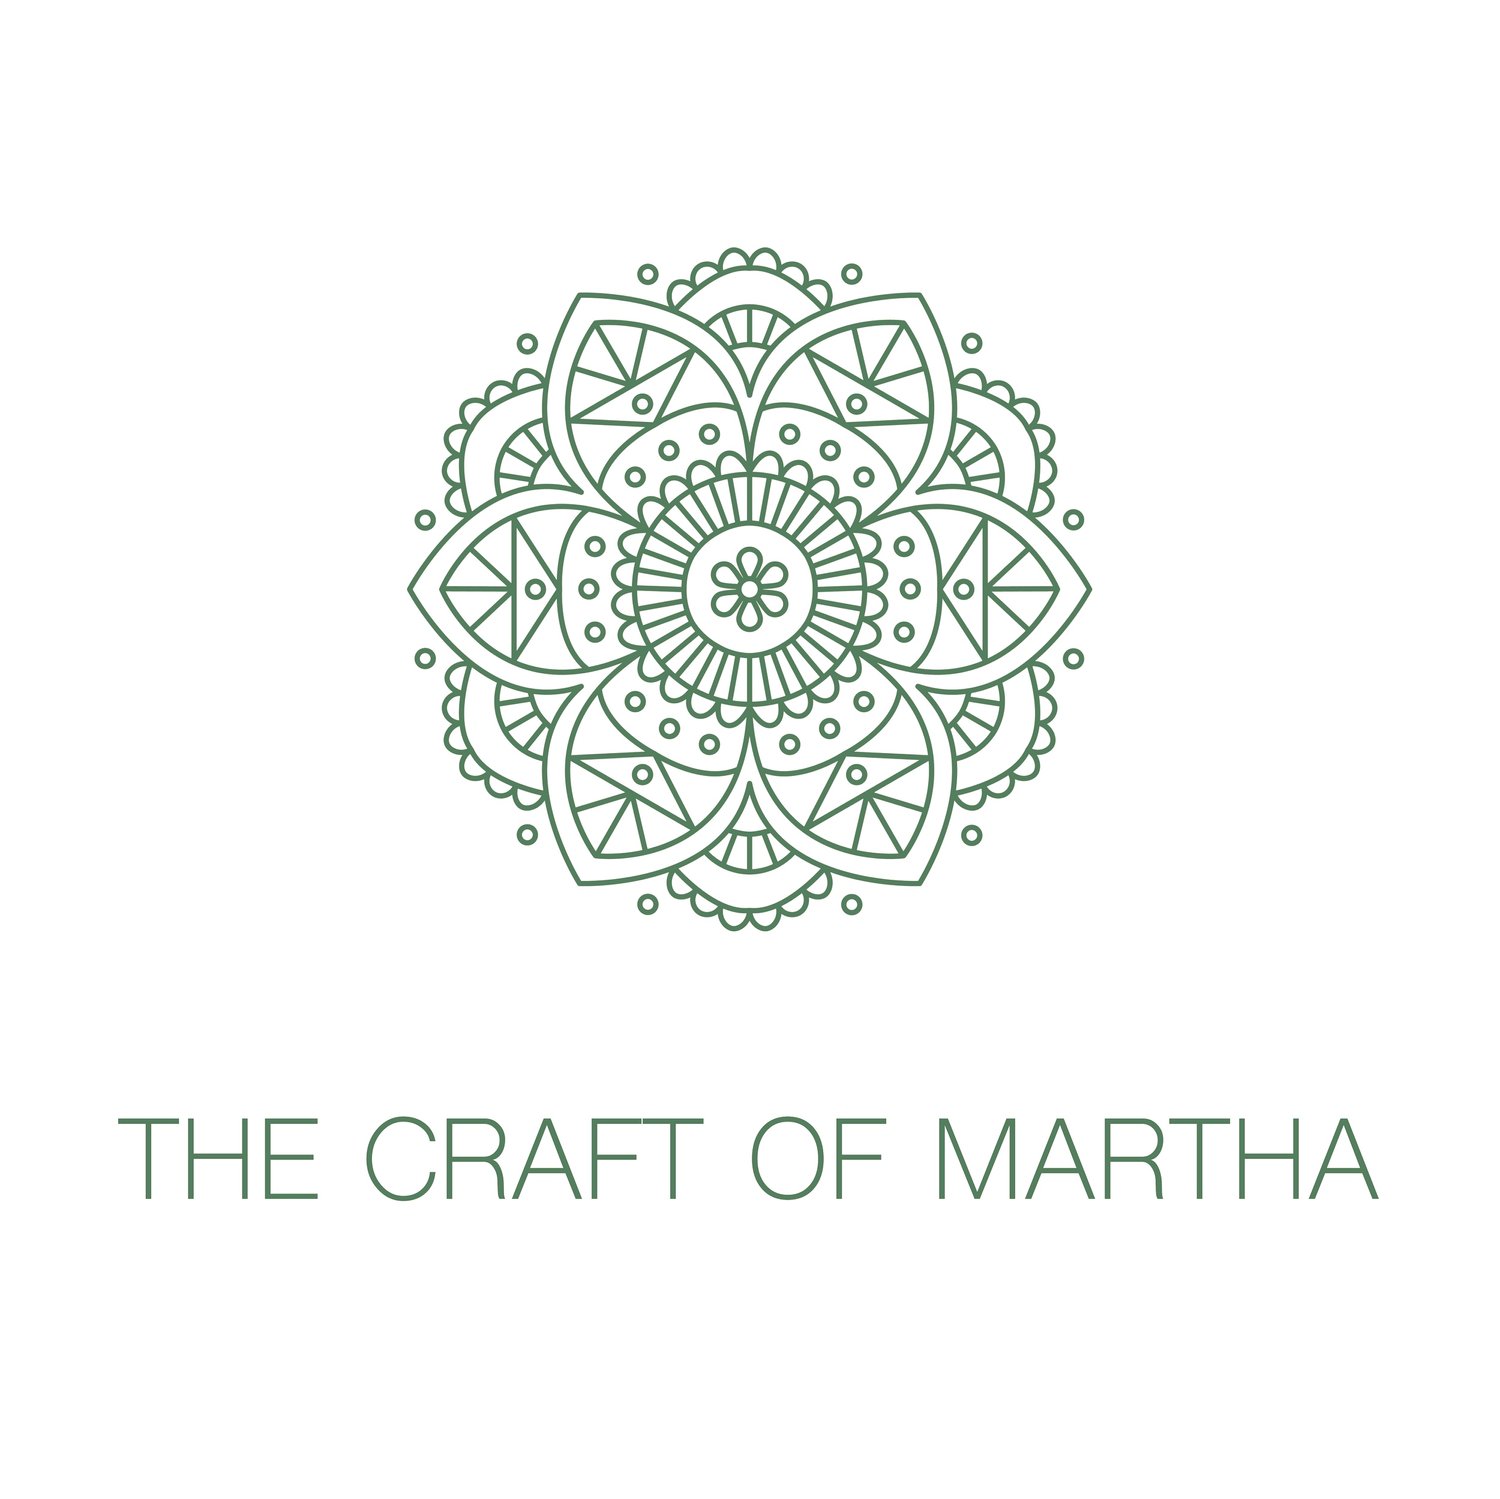 The craft of Martha